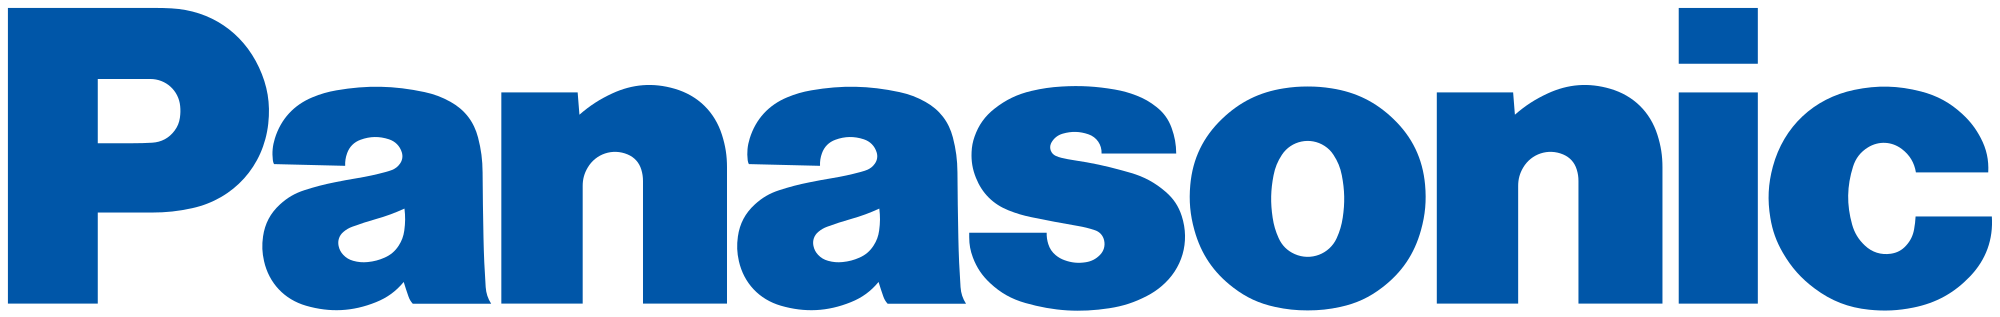 Deep blue Panasonic logo.